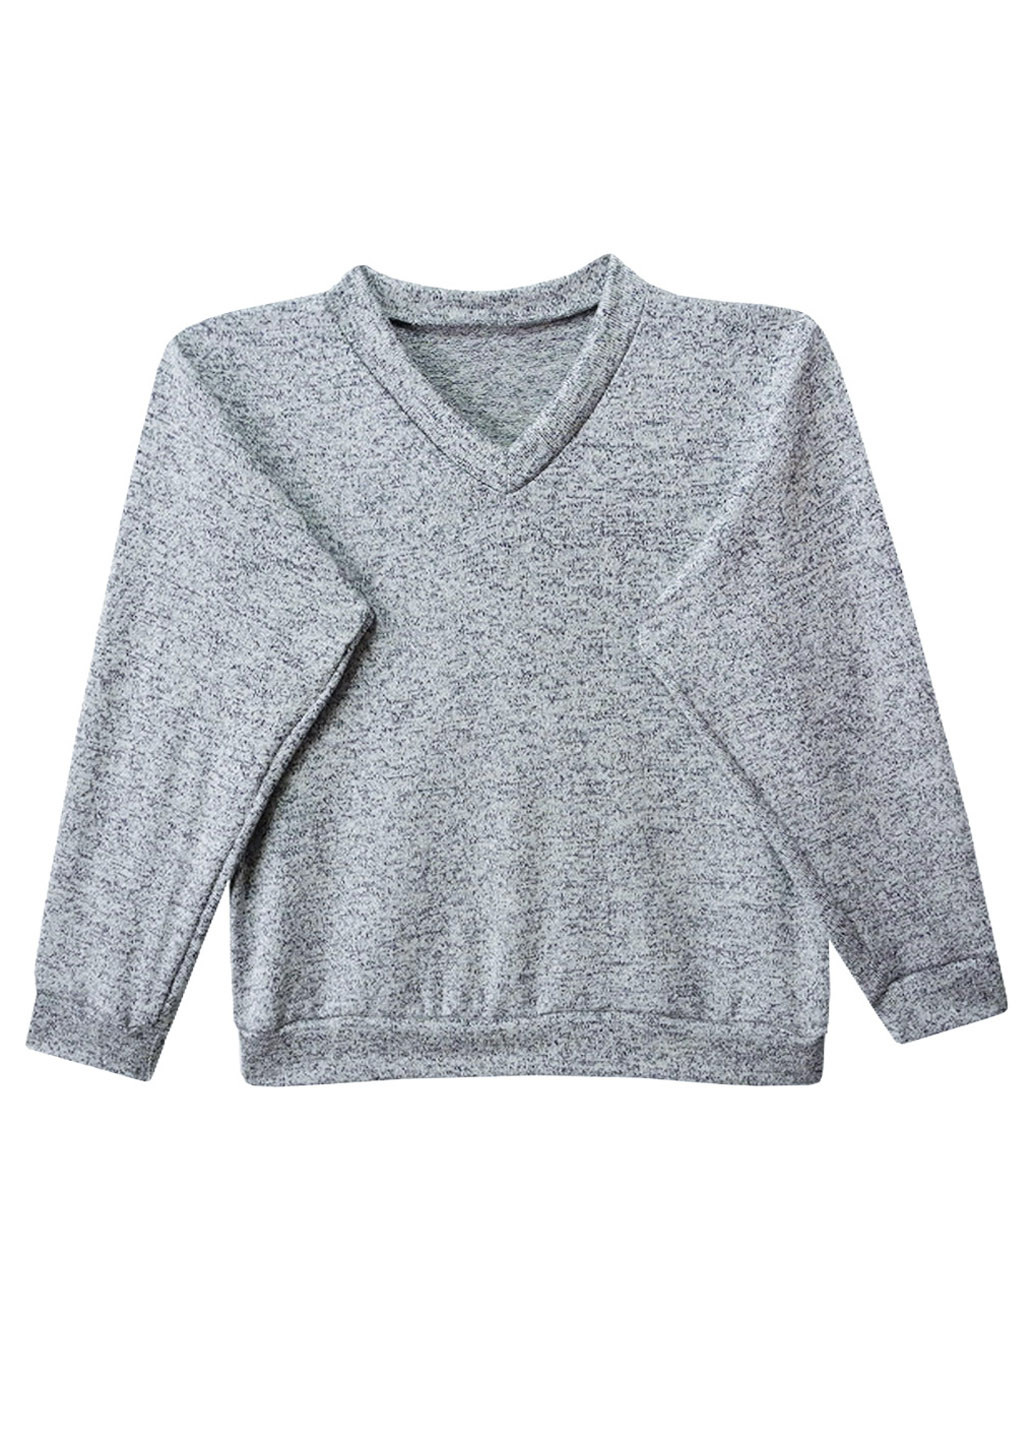 Серый демисезонный пуловер пуловер Клим